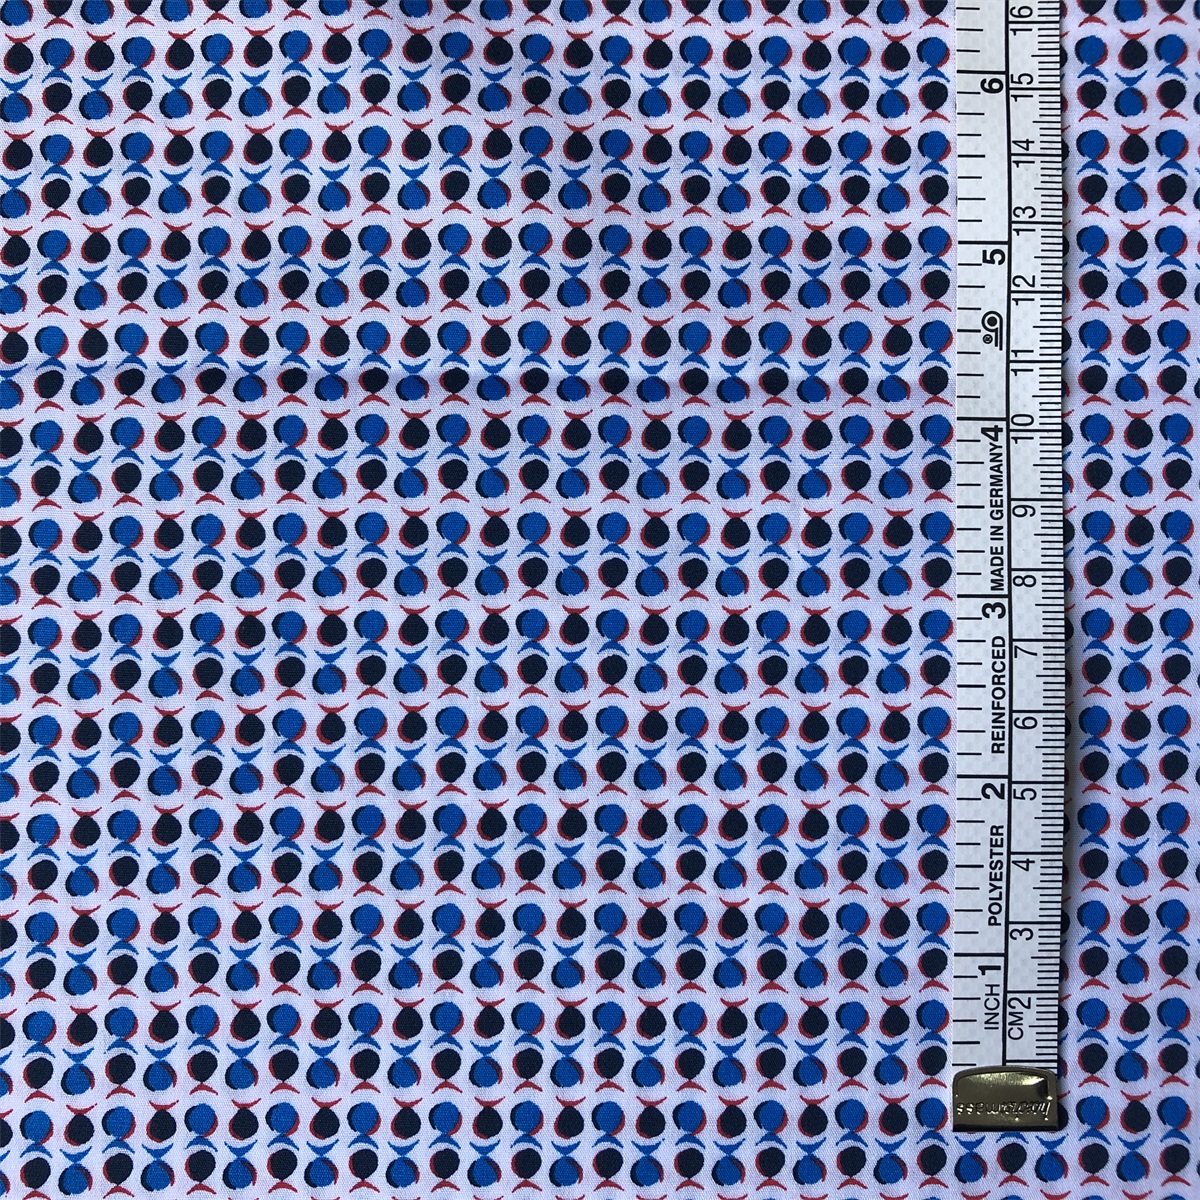 Hot Sun-rising Textile Cotton fabric customized pattern 100%cotton poplin printed shirts woven fabric for men's casual shirts